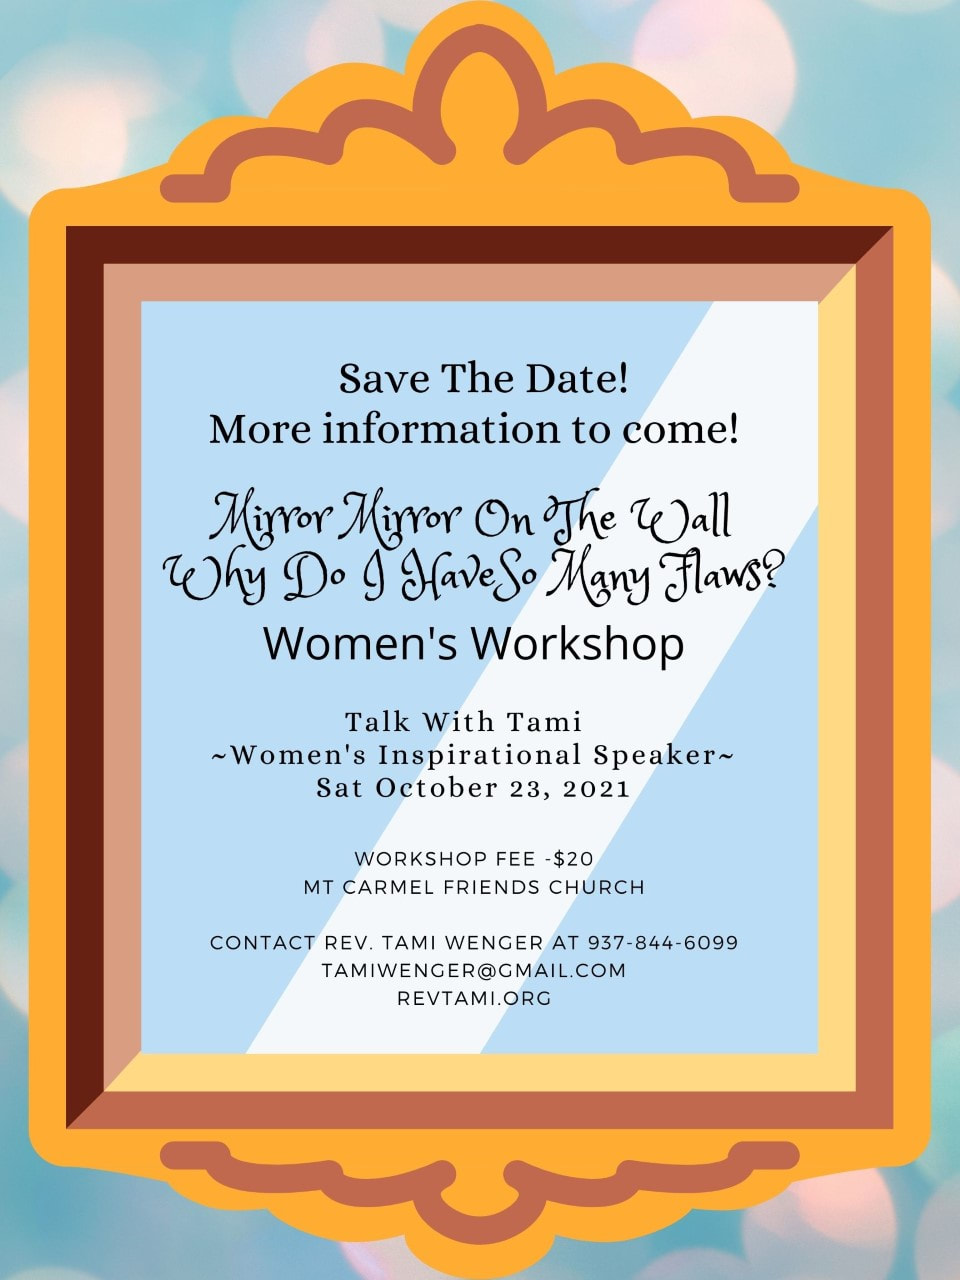 Women's Workshop October 23, 2021 at Mt. Carmel Church details